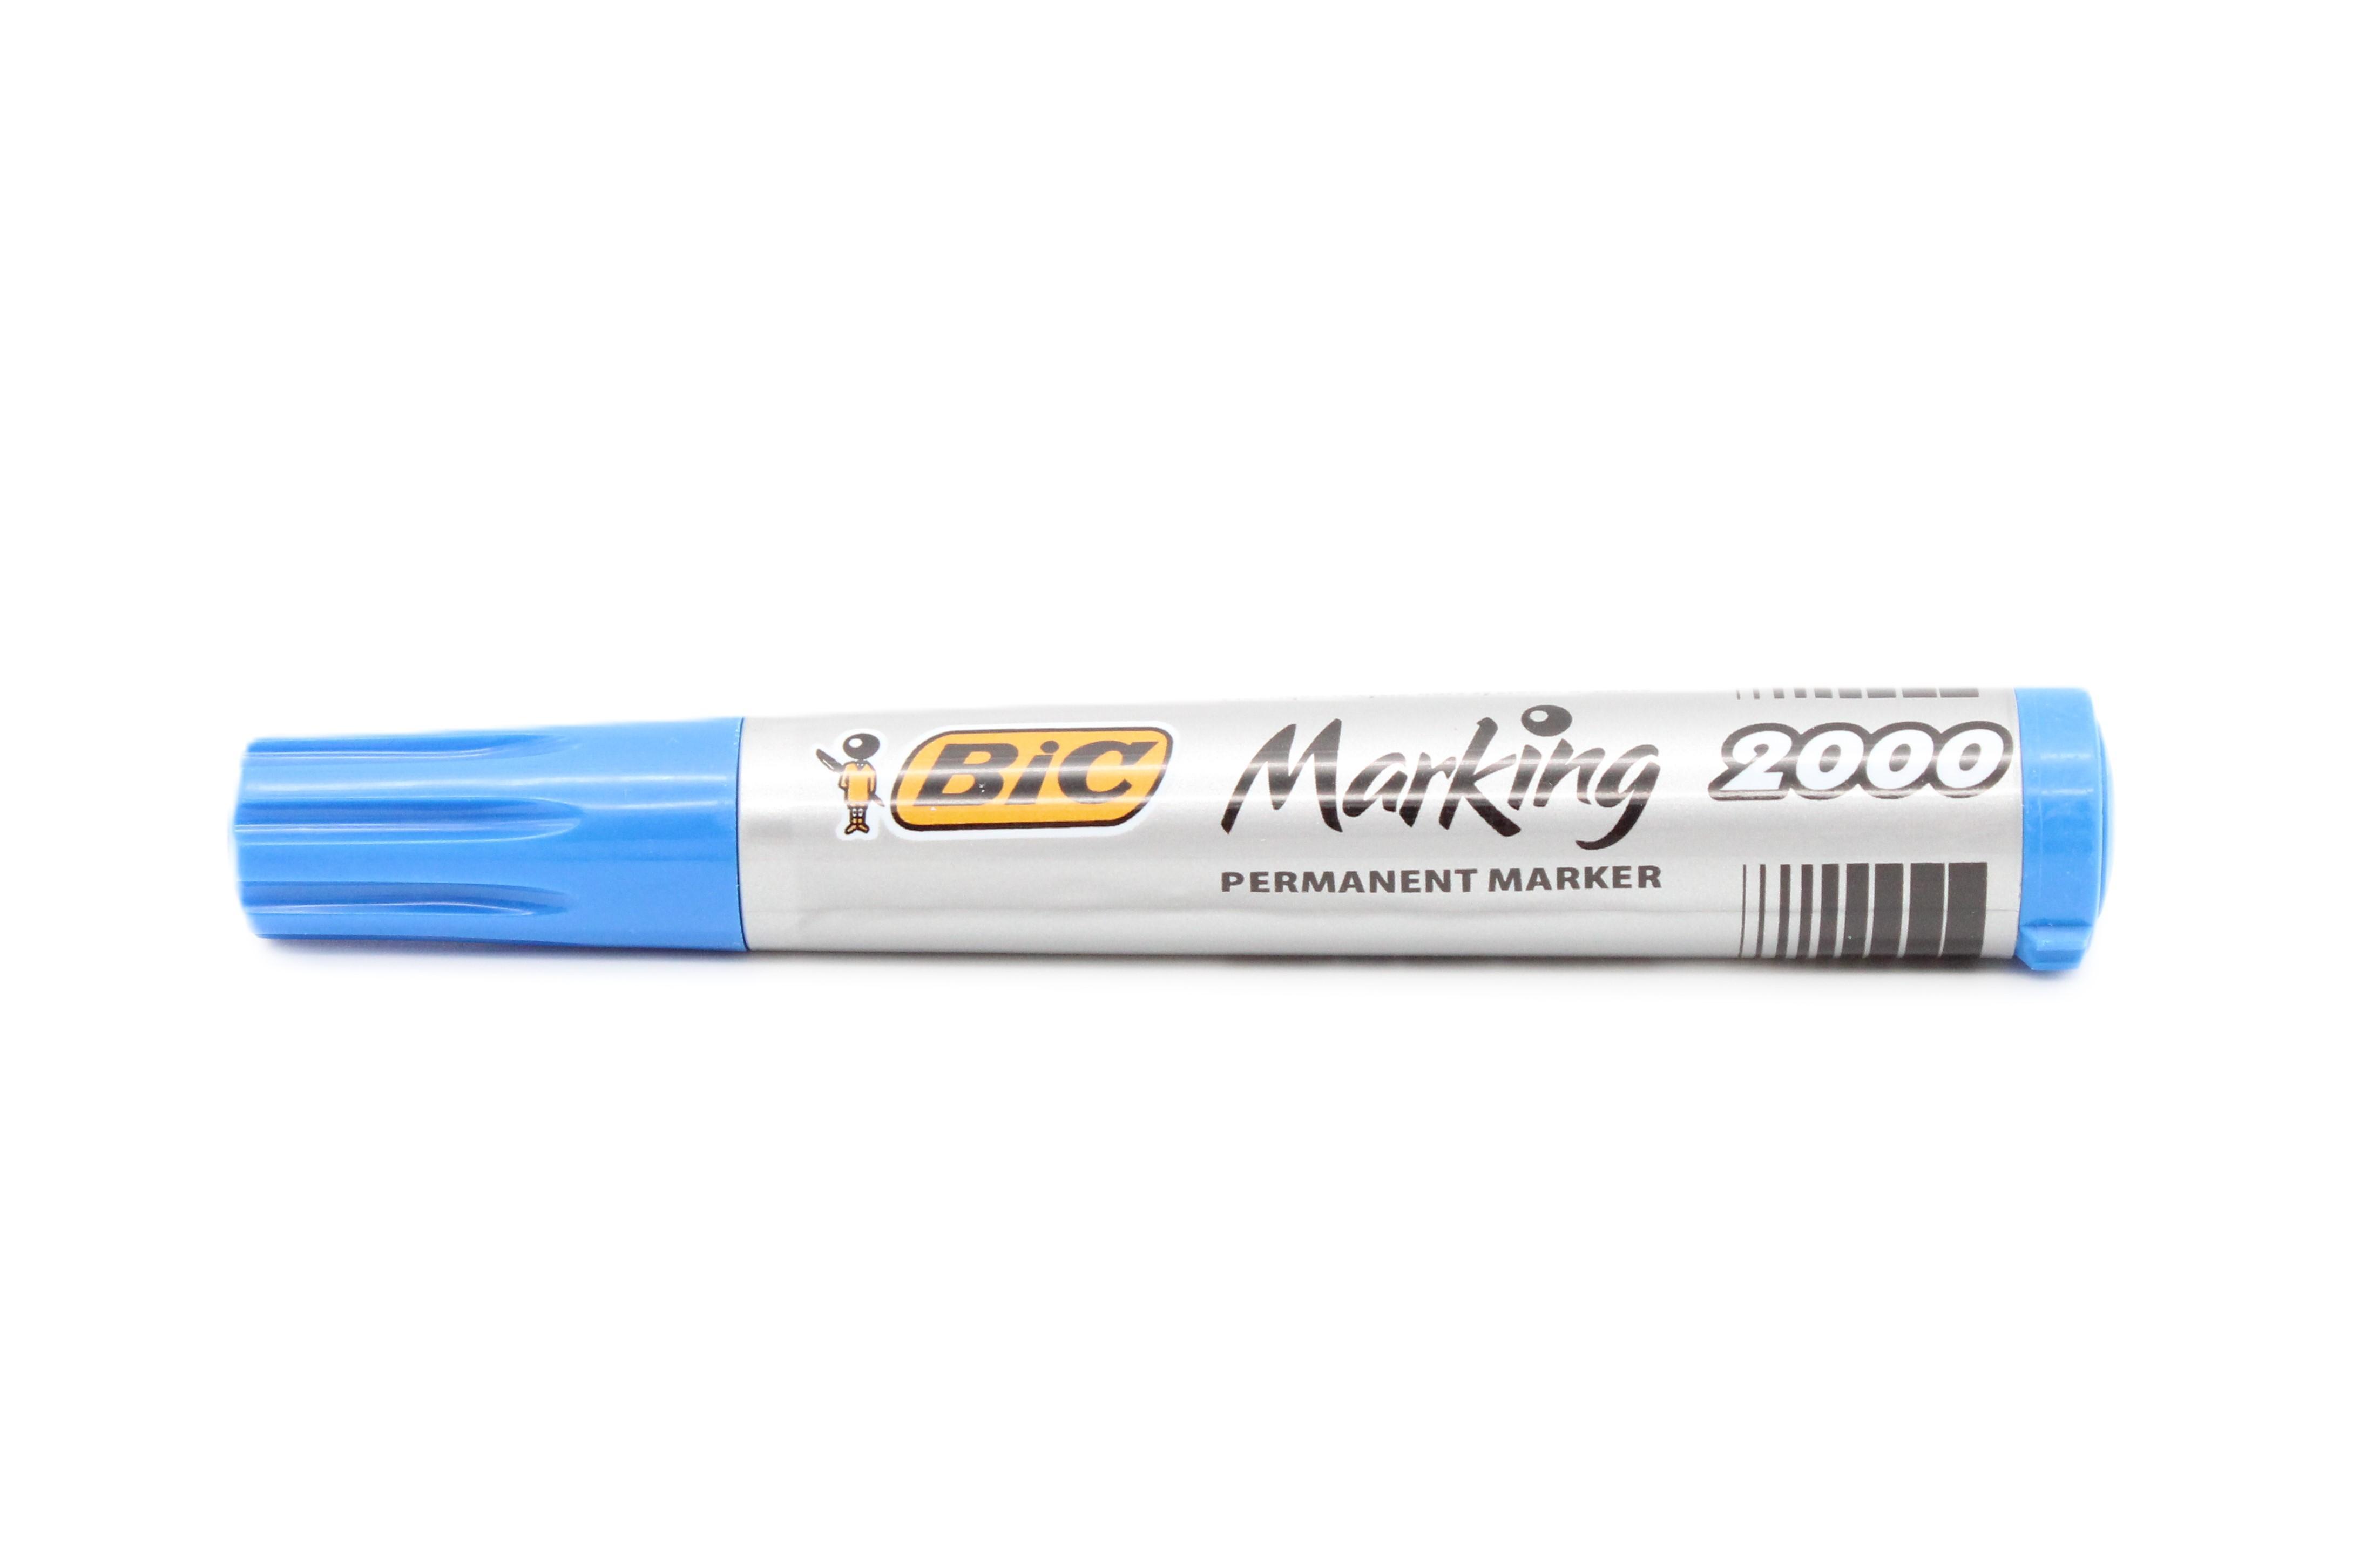 Pennarello Bic Marking 2000 blu punta tonda 1.7mm